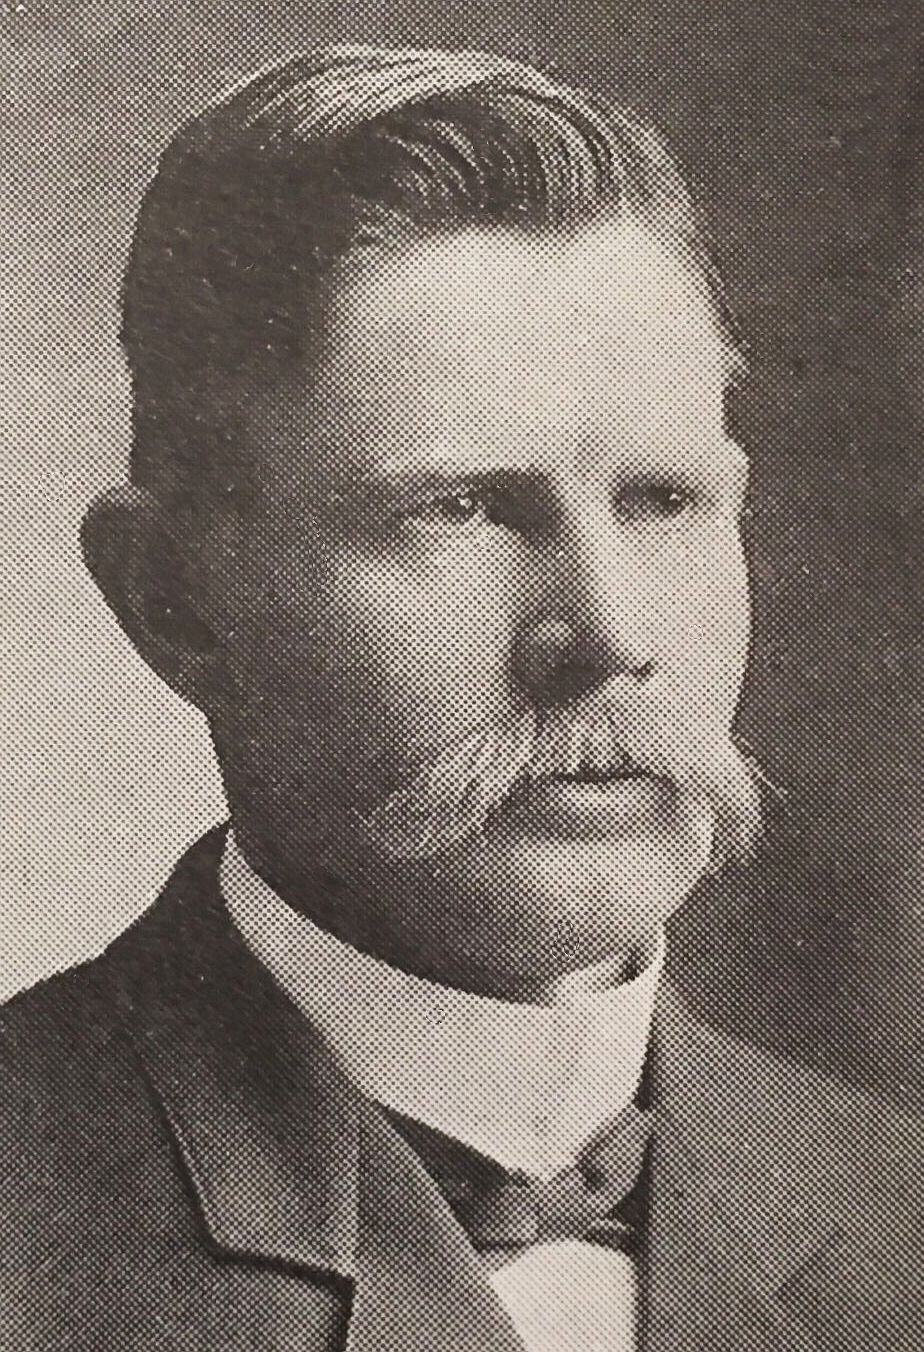 John Frederic Nash (1865 - 1954) Profile